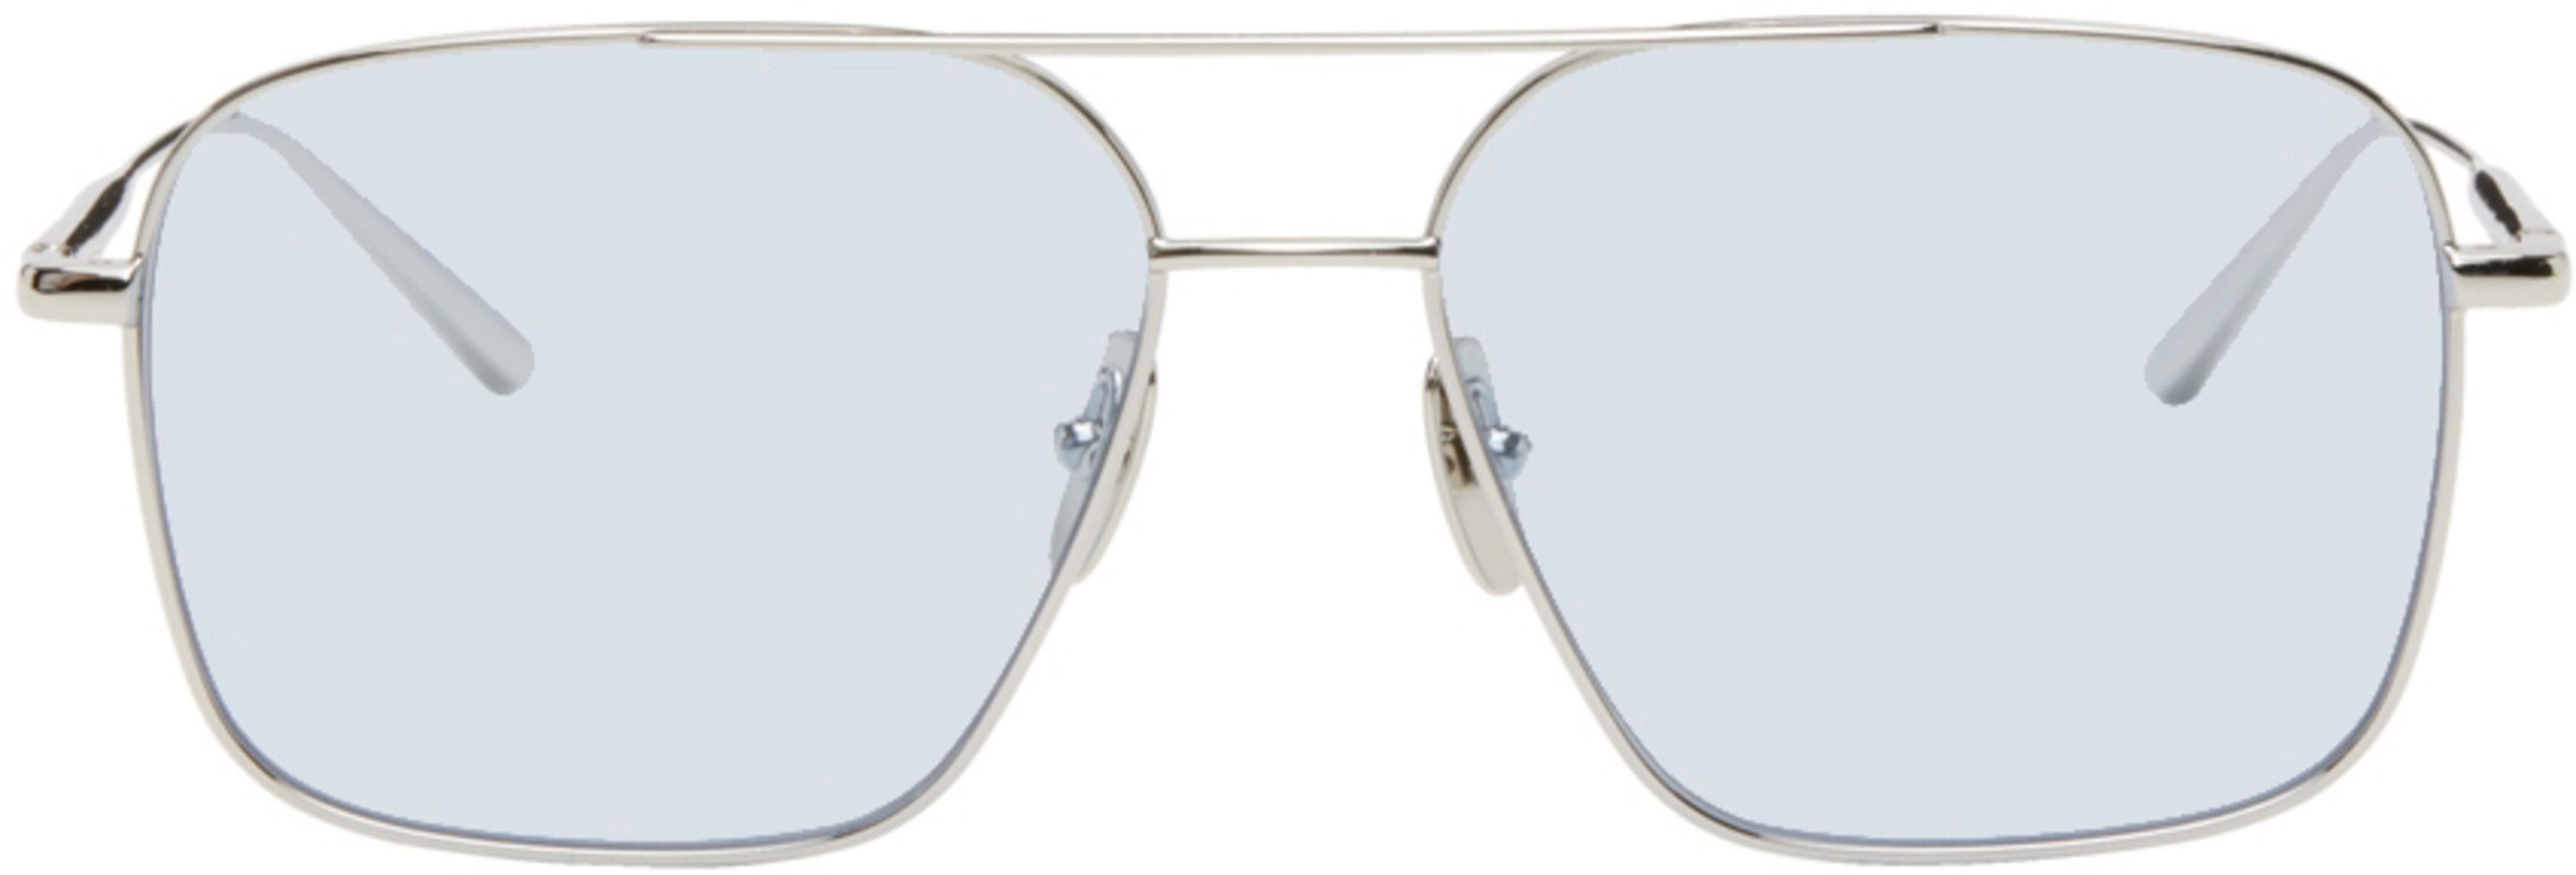 Blue Steel Aviator Sunglasses by CHIMI